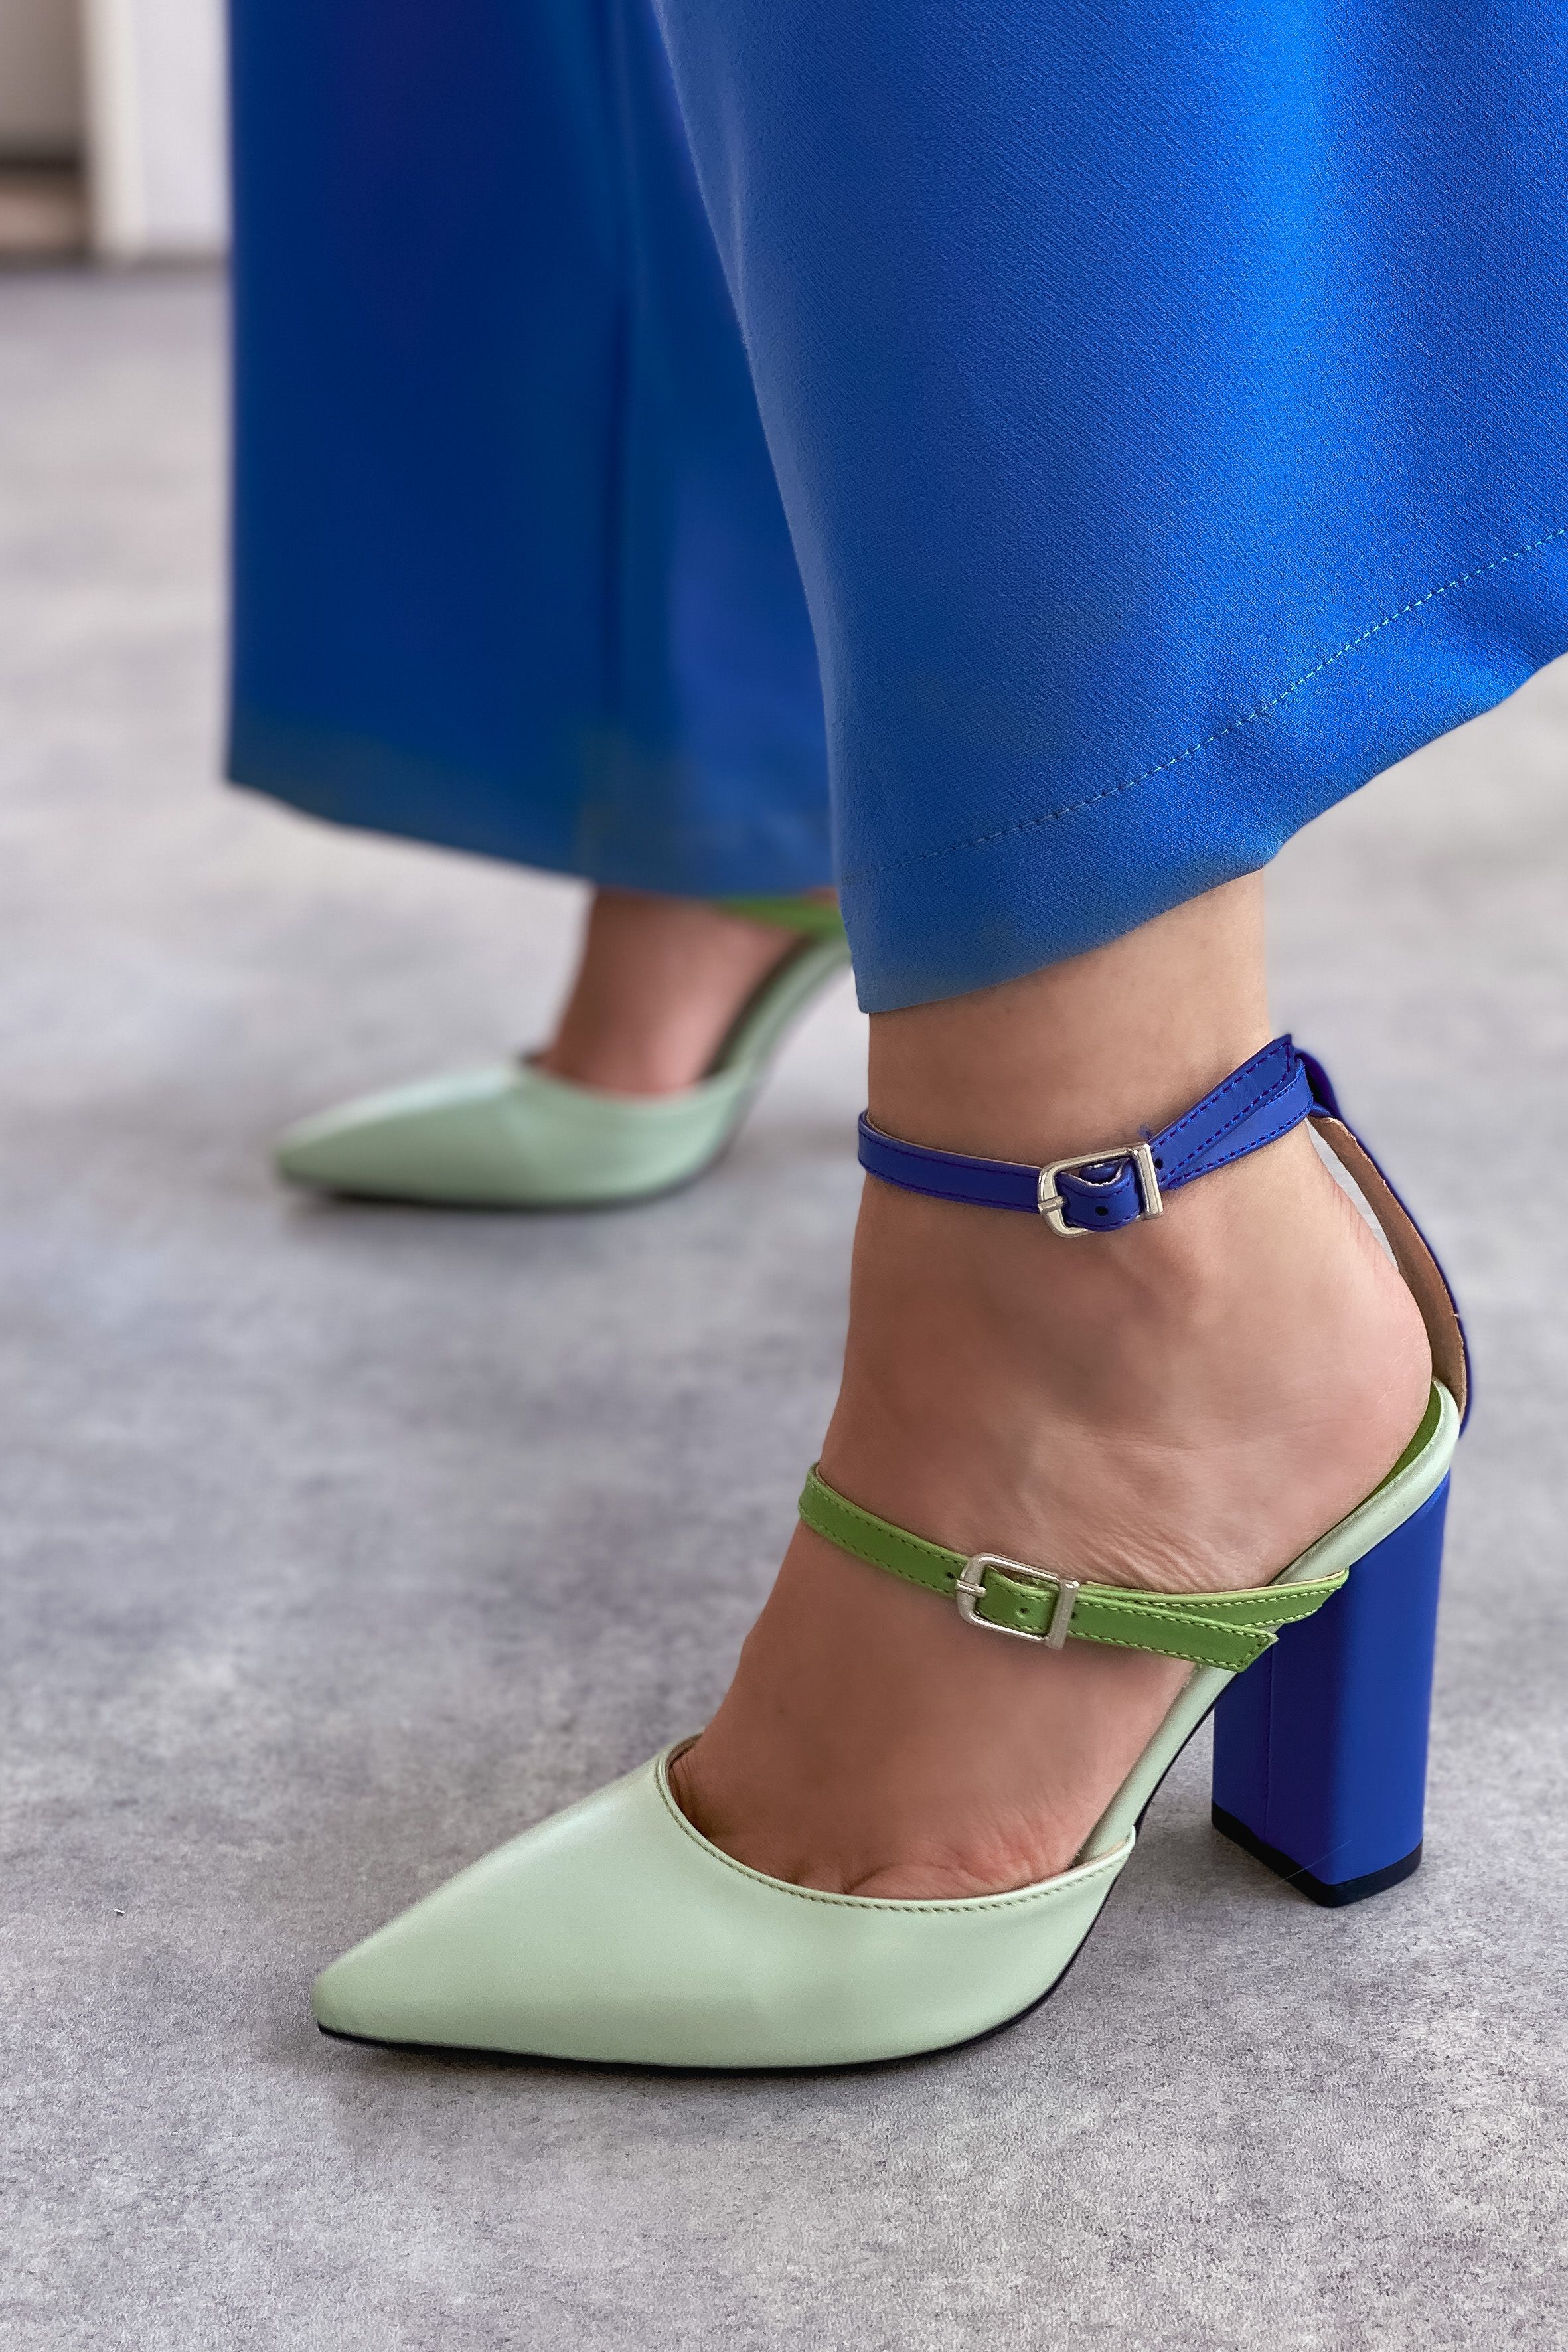 Olenpa matte leather high heeled shoes green